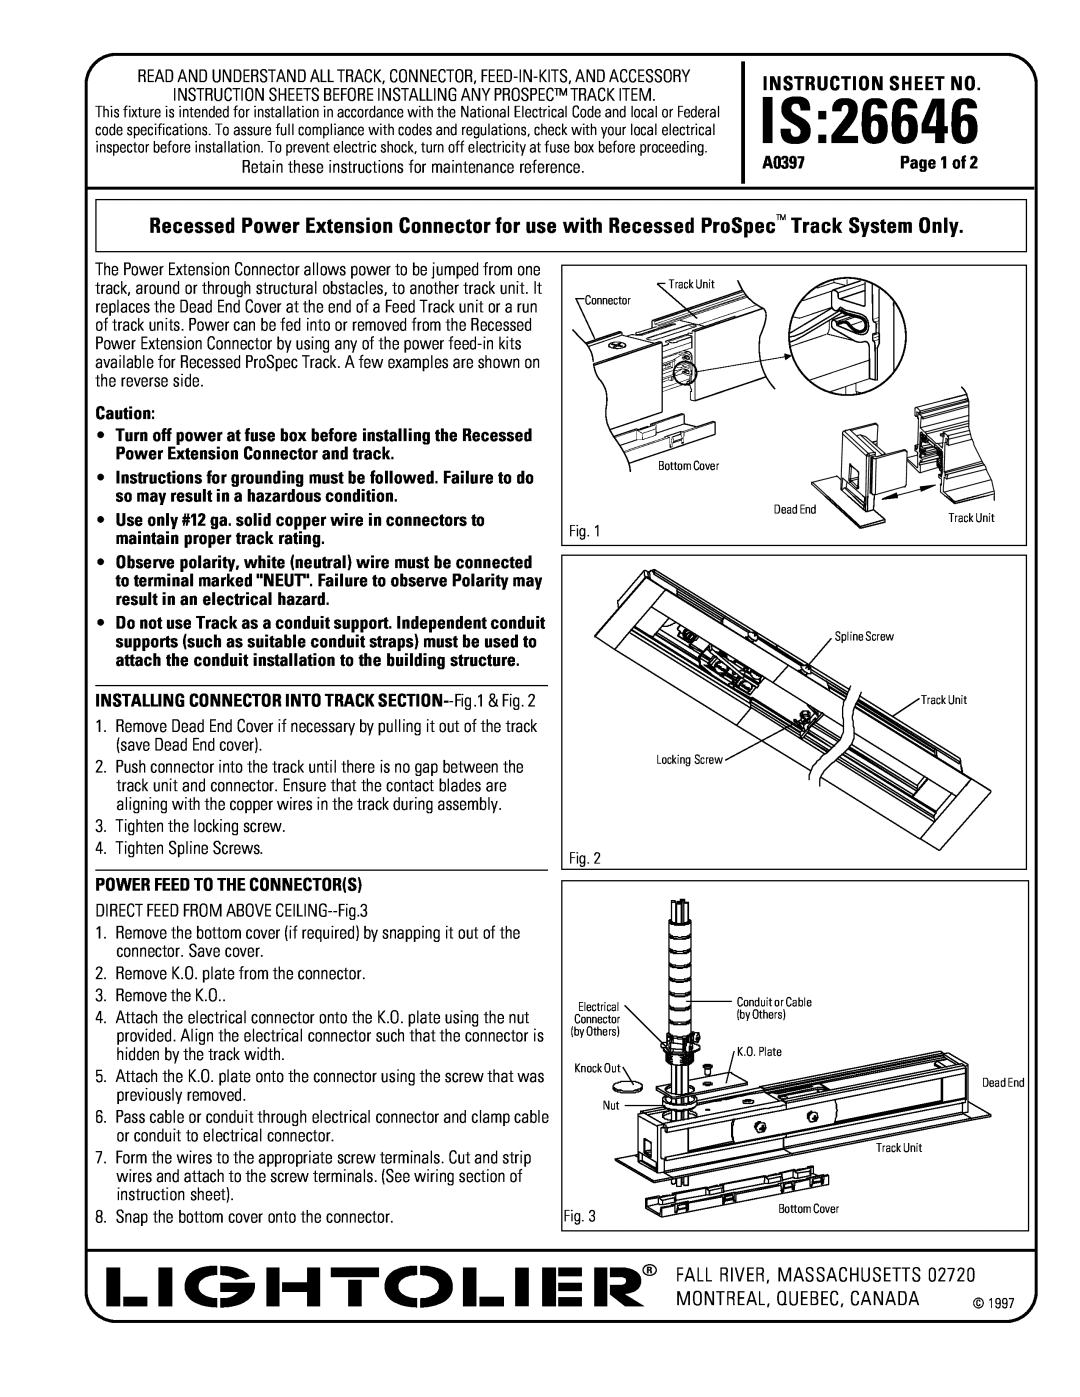 Lightolier 26646 instruction sheet Is, Instruction Sheet No, Fall River, Massachusetts 